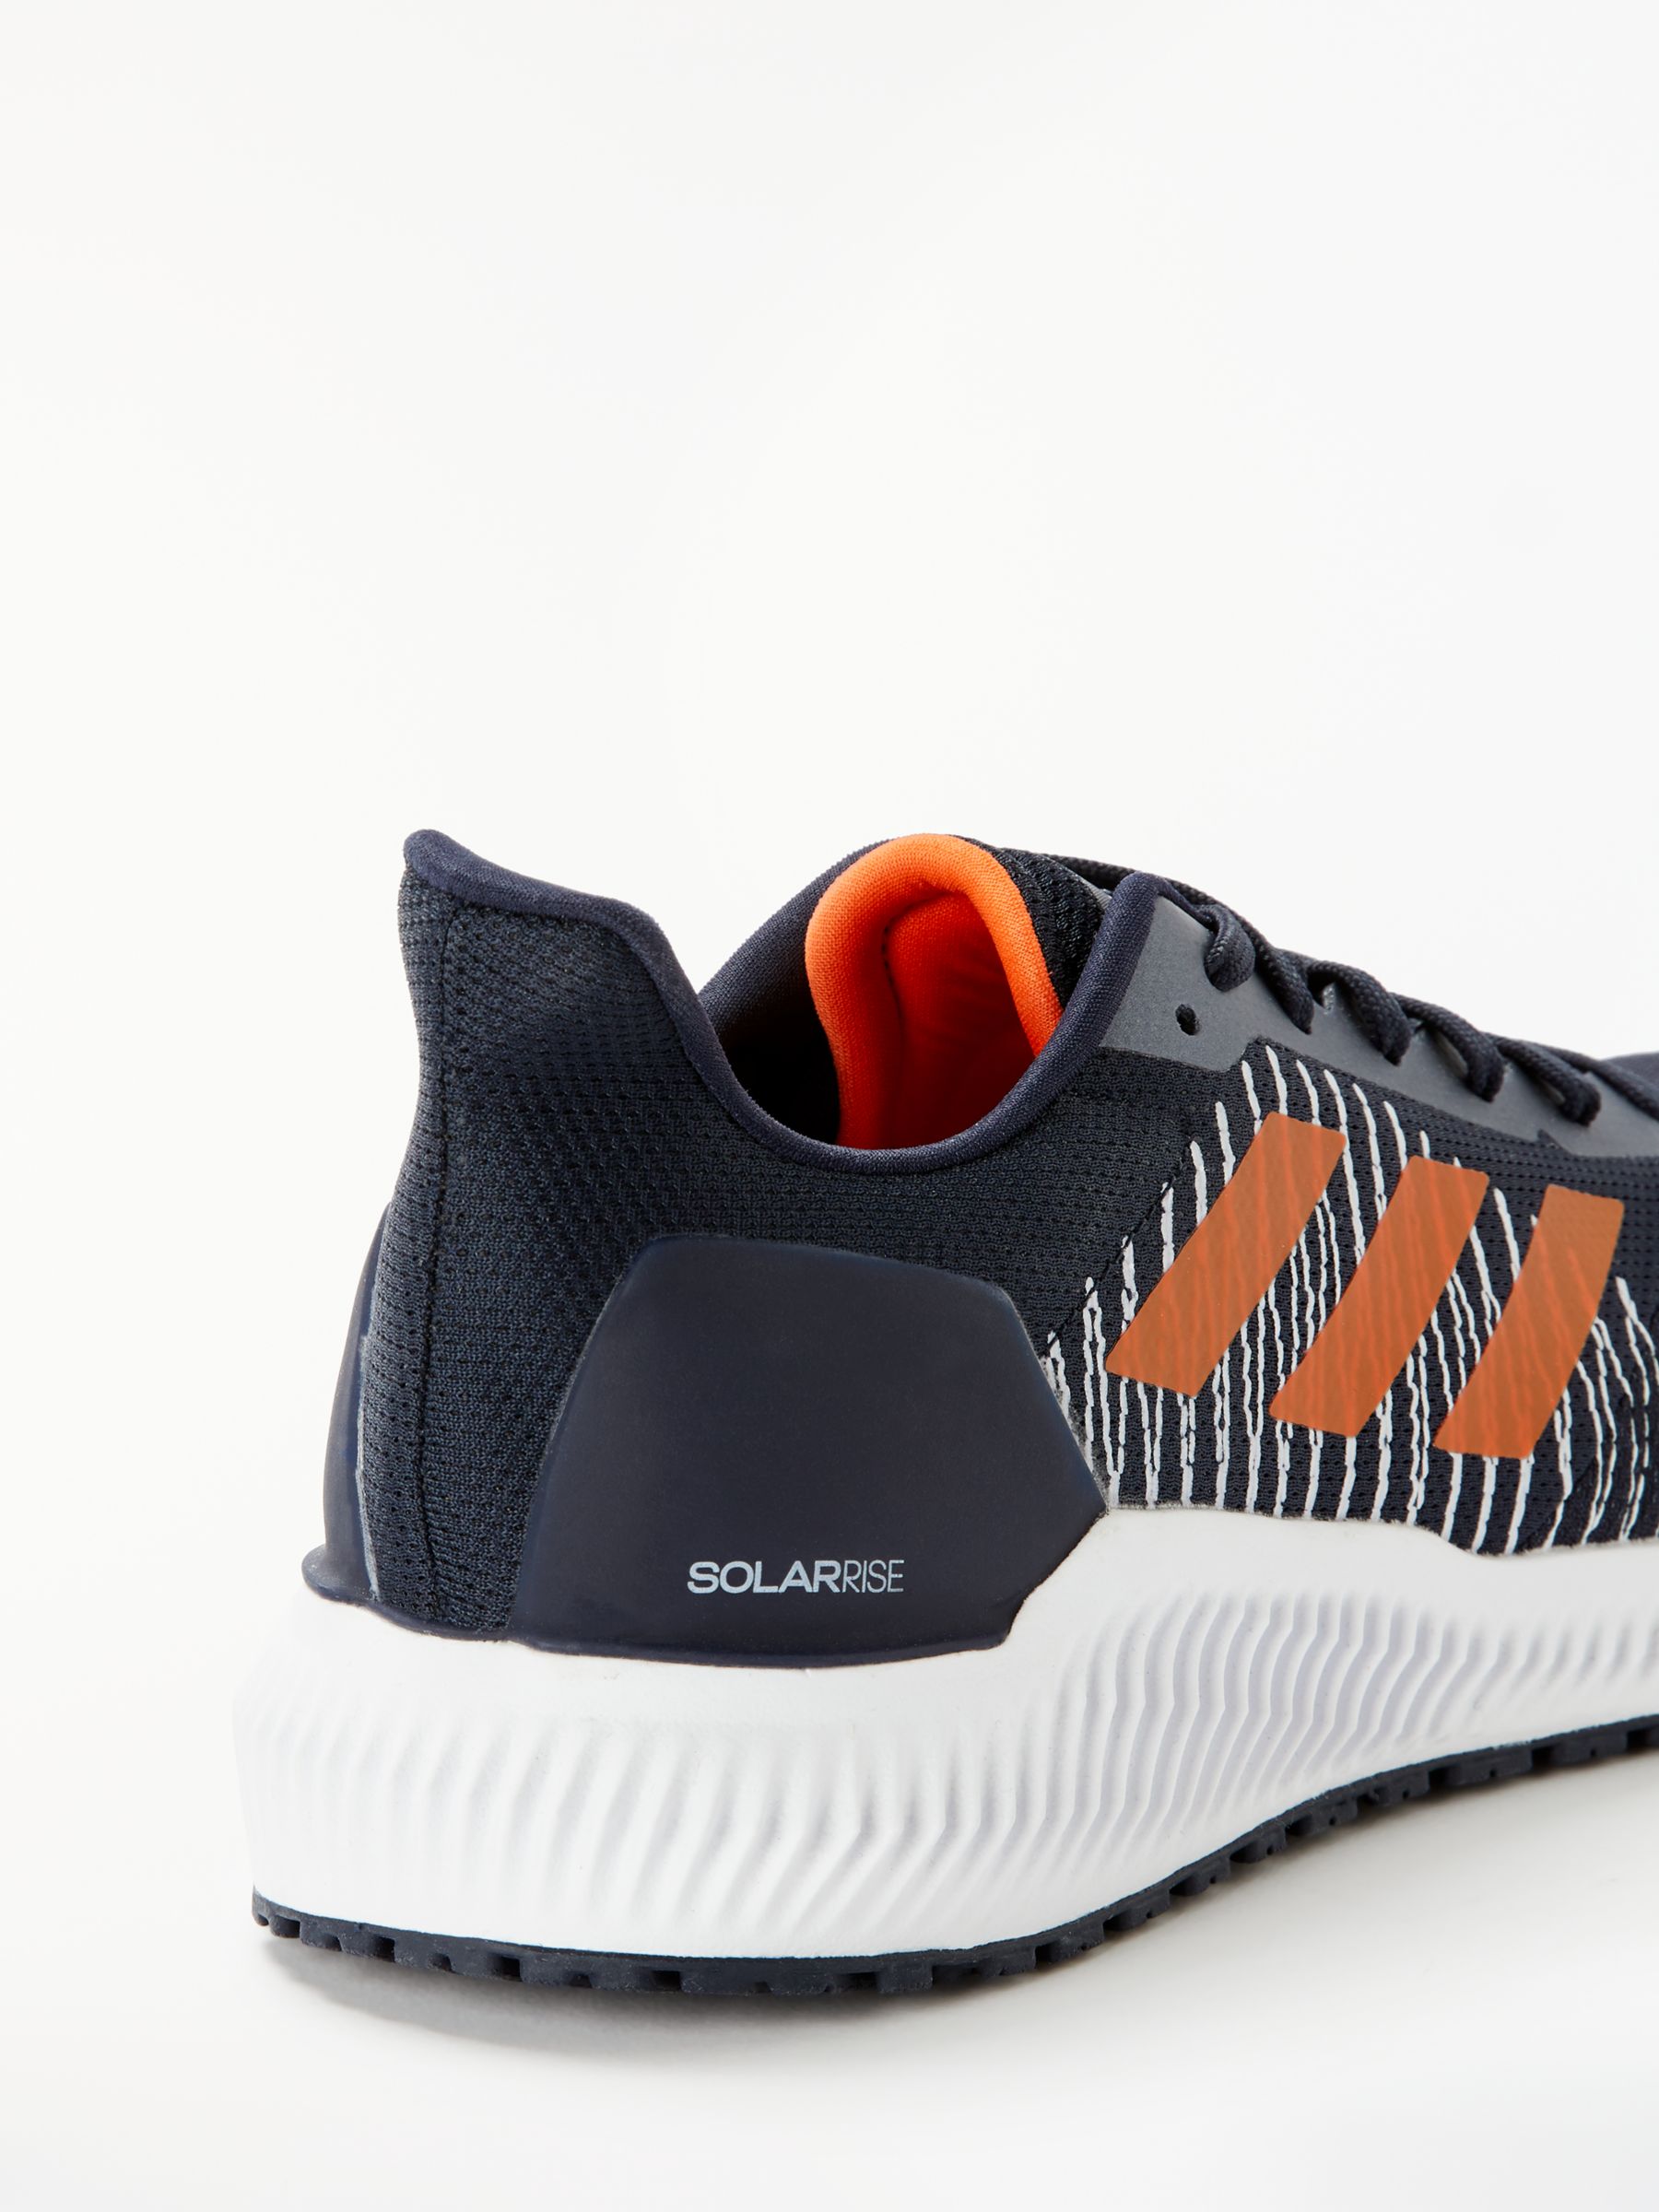 adidas solar ride men's running shoes